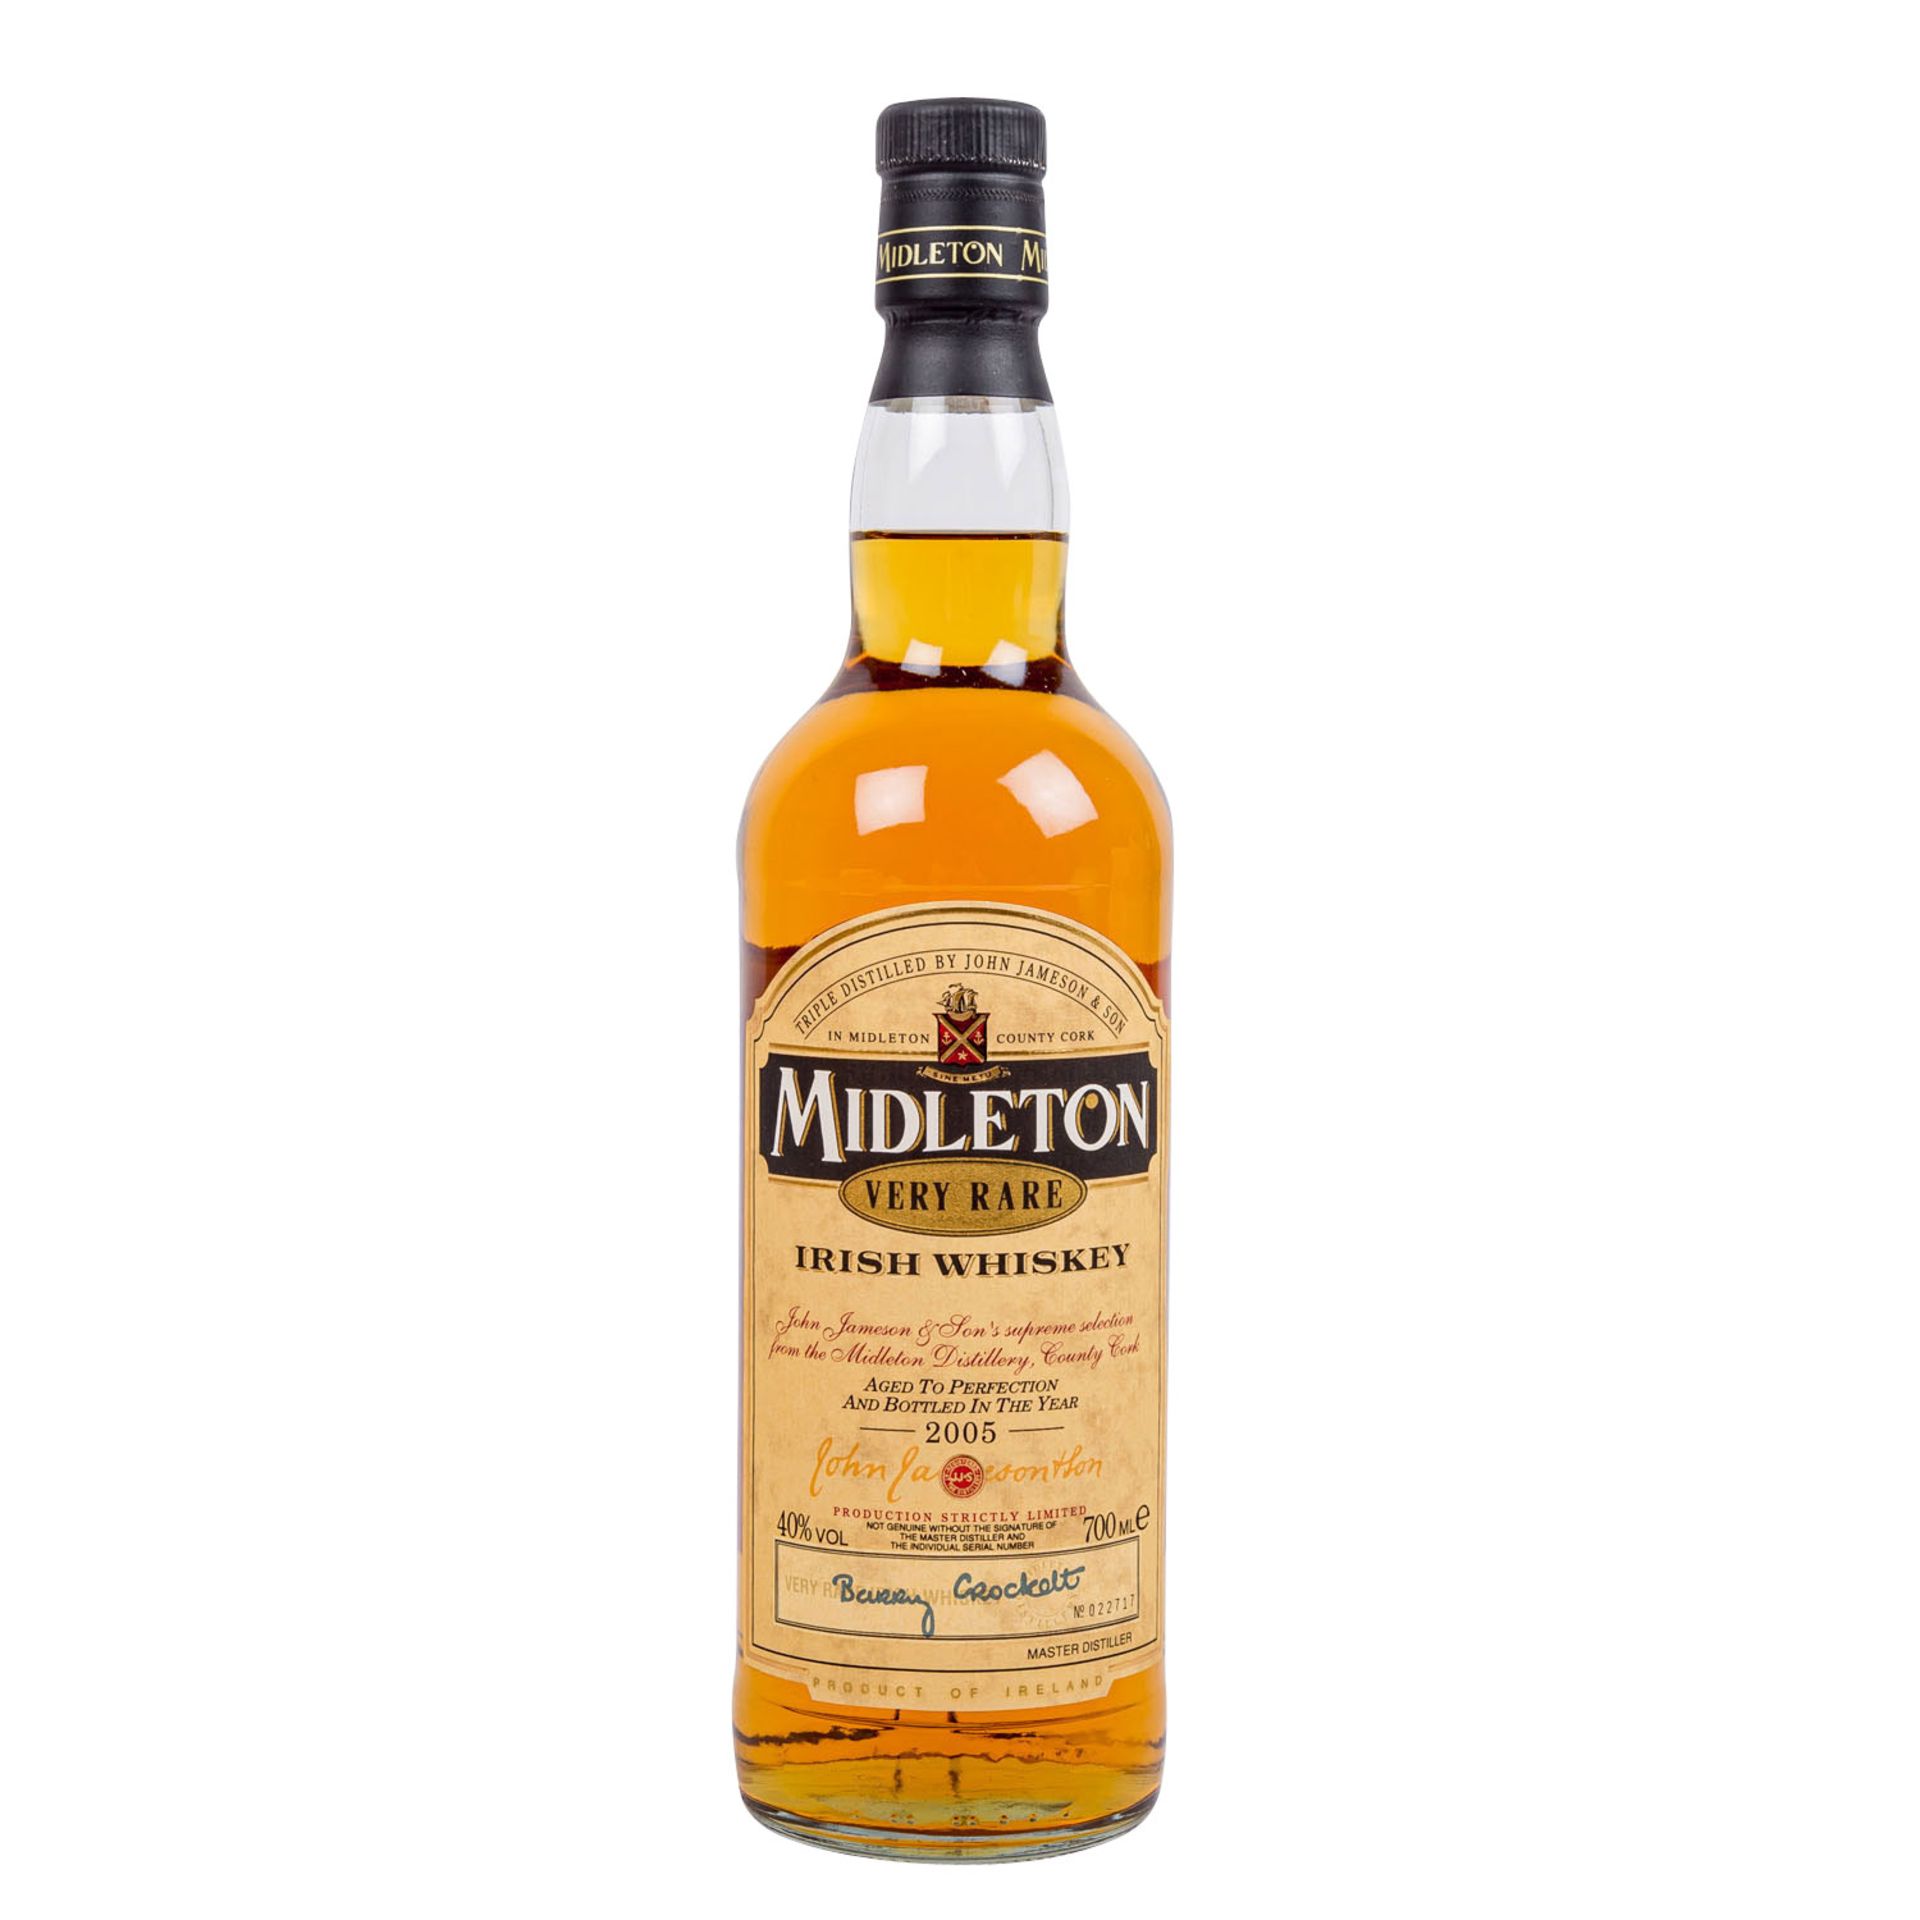 MIDDLETON Very Rare Irish Whiskey 2005 - Image 2 of 7